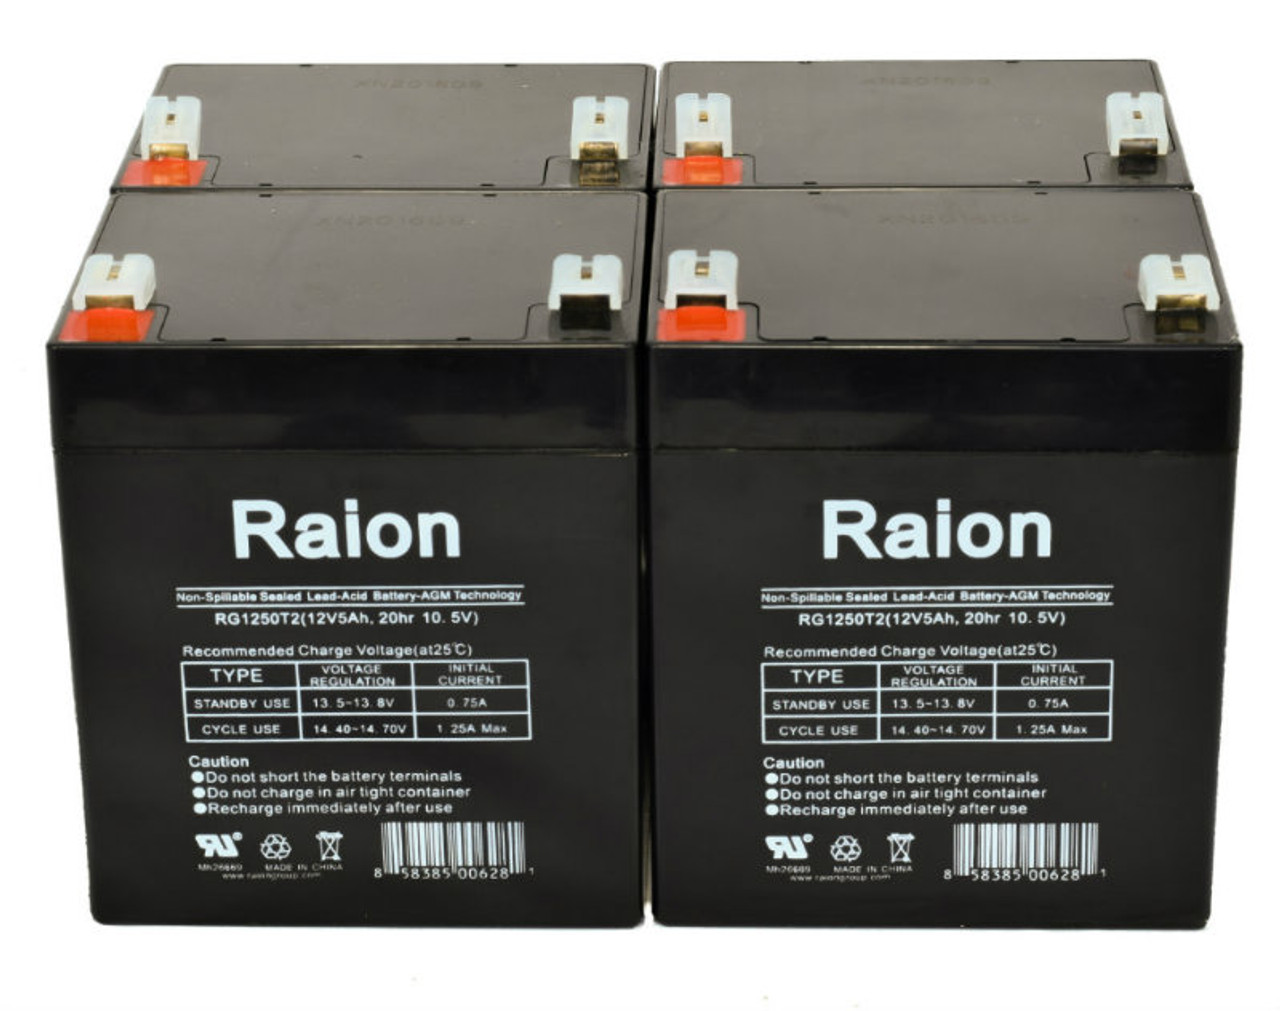 Raion Power 12V 5Ah RG1250T2 Replacement Lead Acid Battery for Kinghero SJ12V5Ah - 4 Pack